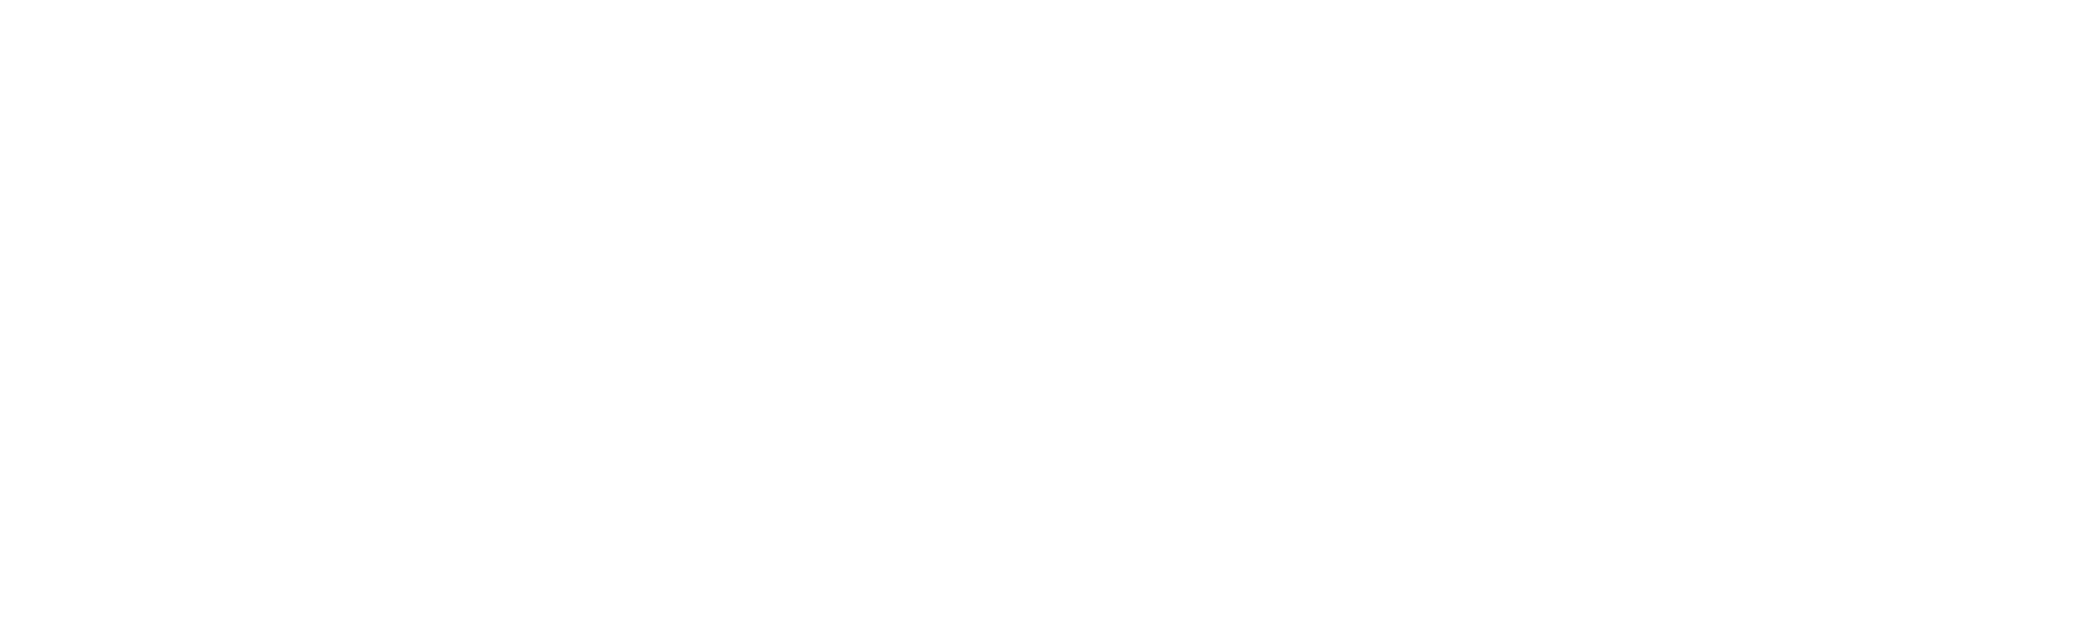 Centro educativo ignacio manuel altamirano